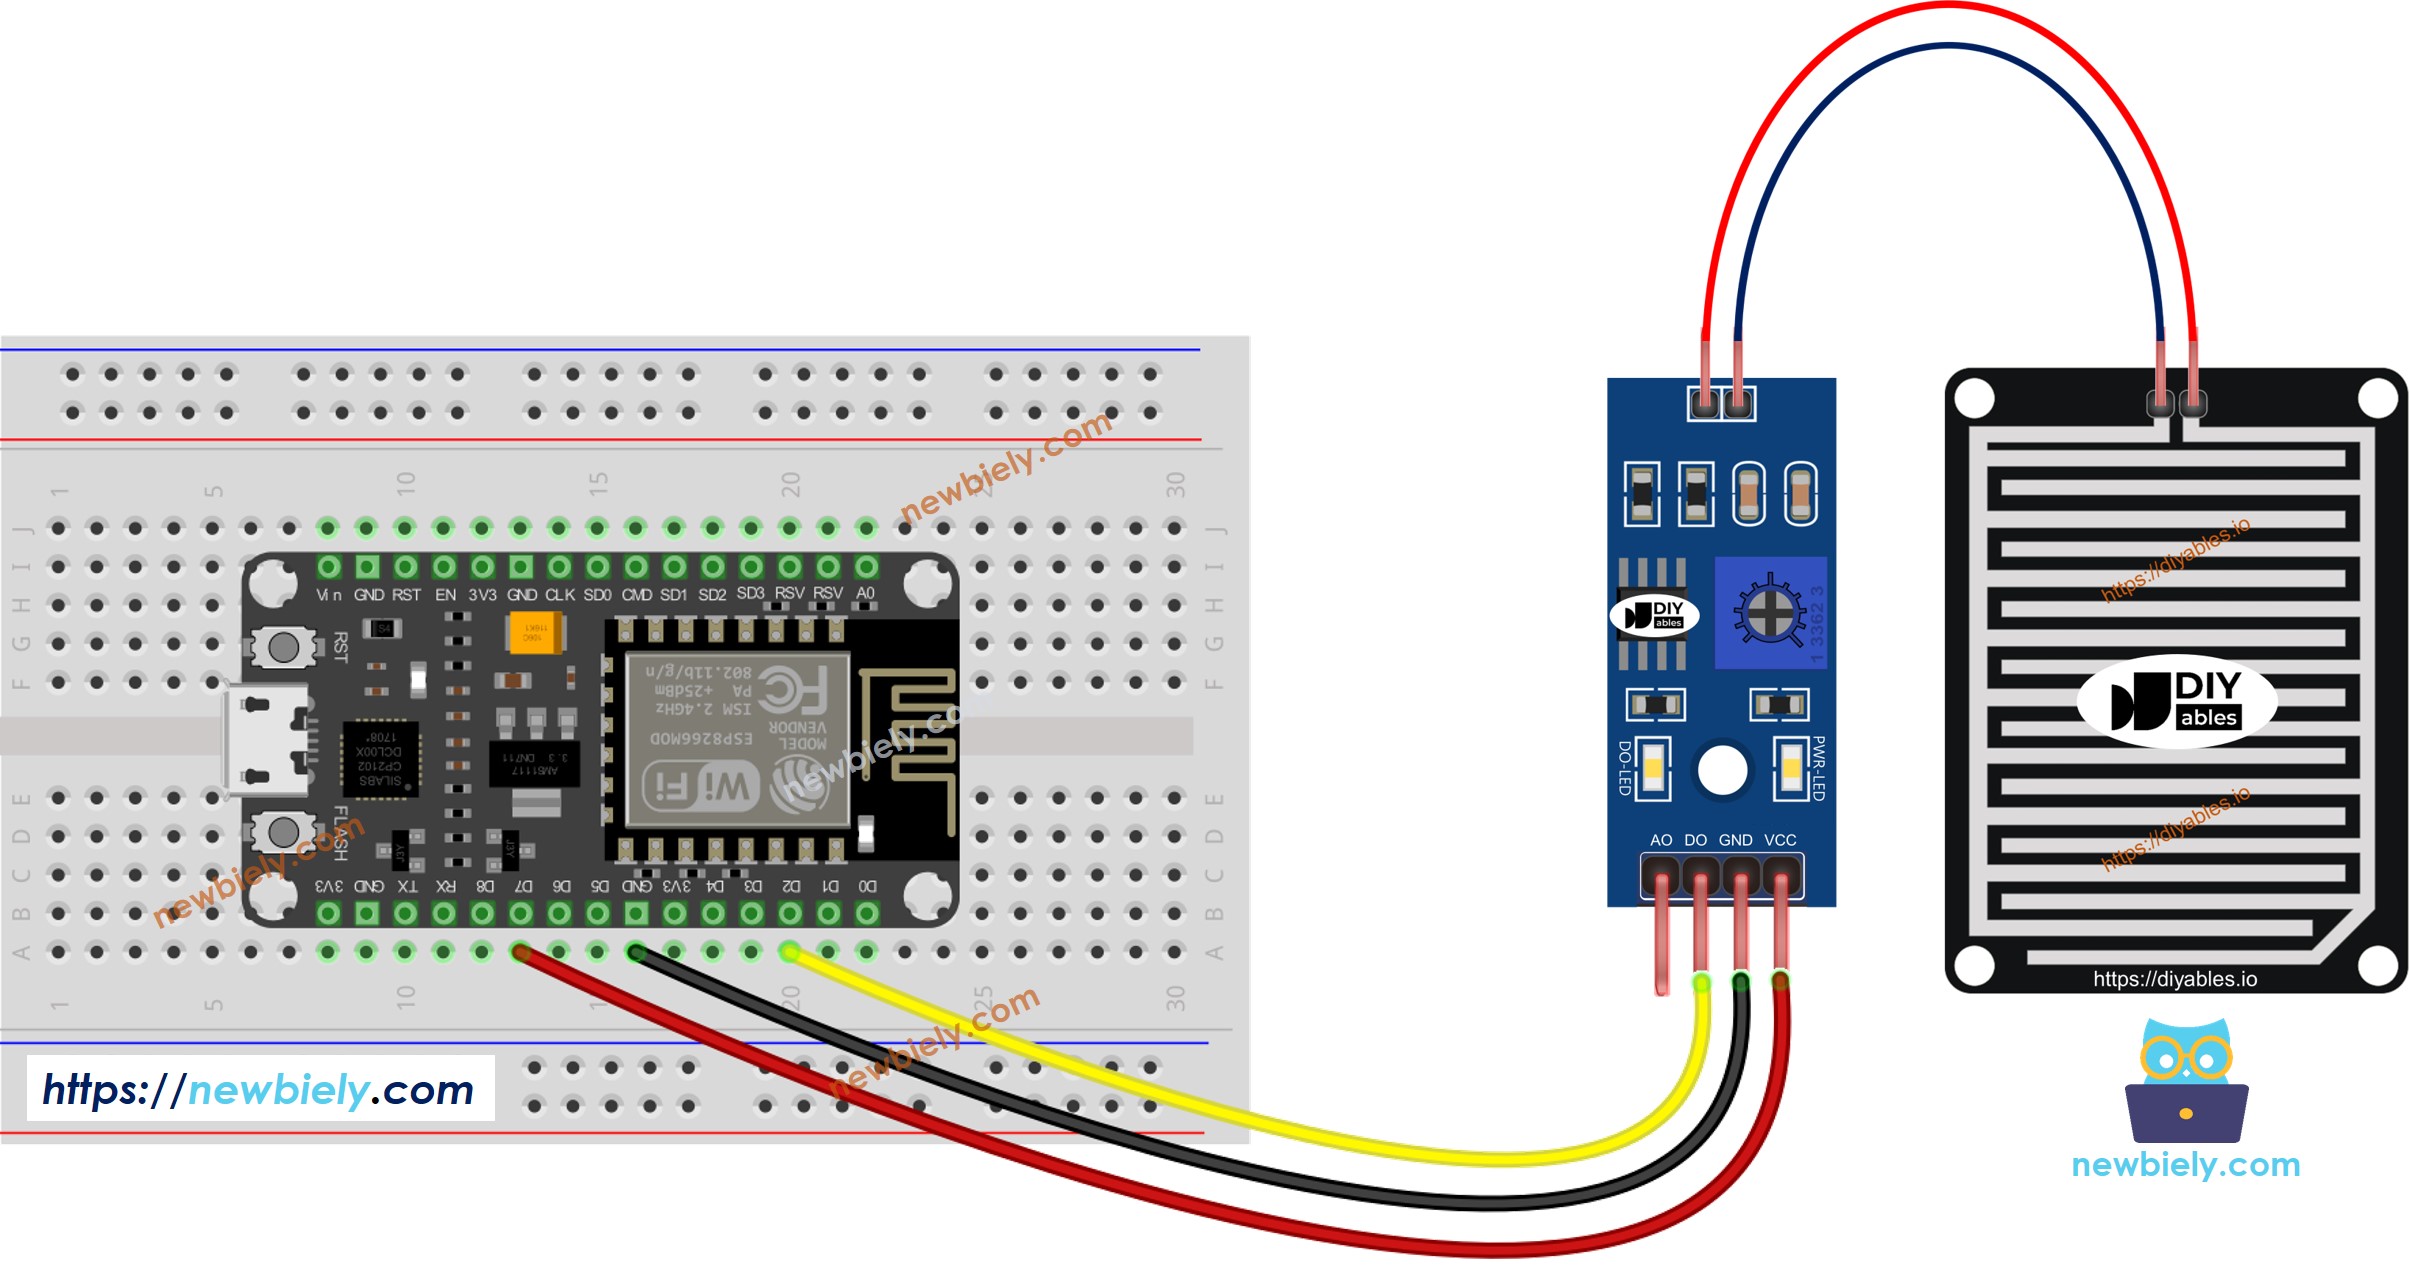 The wiring diagram between ESP8266 NodeMCU and rain sensor